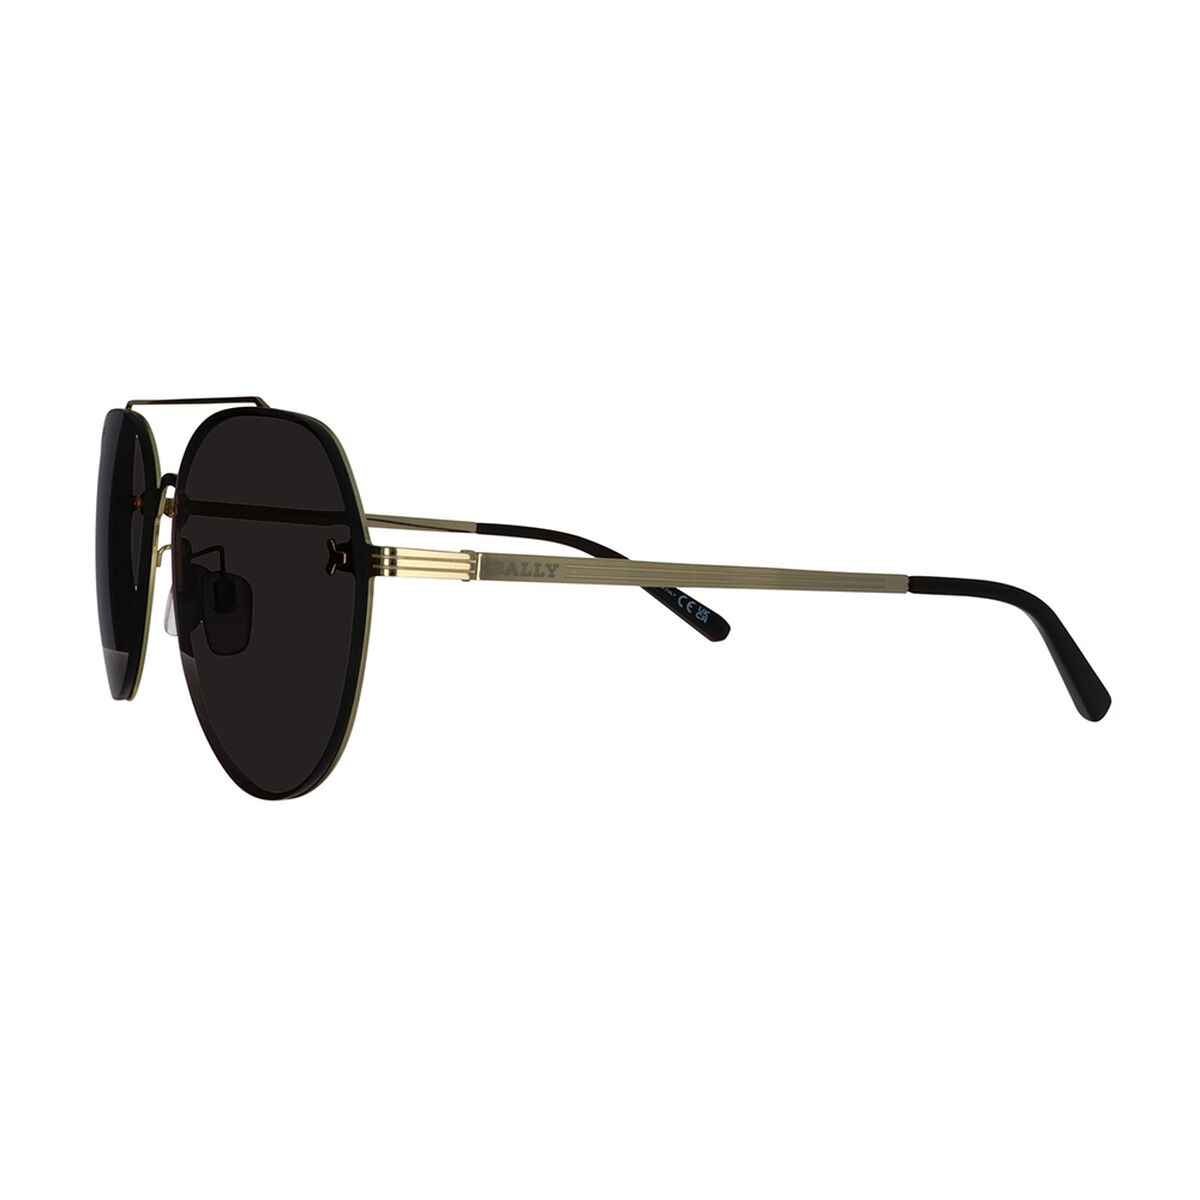 Kaufe Herrensonnenbrille Bally BY0106_H-32A-59 bei AWK Flagship um € 124.00